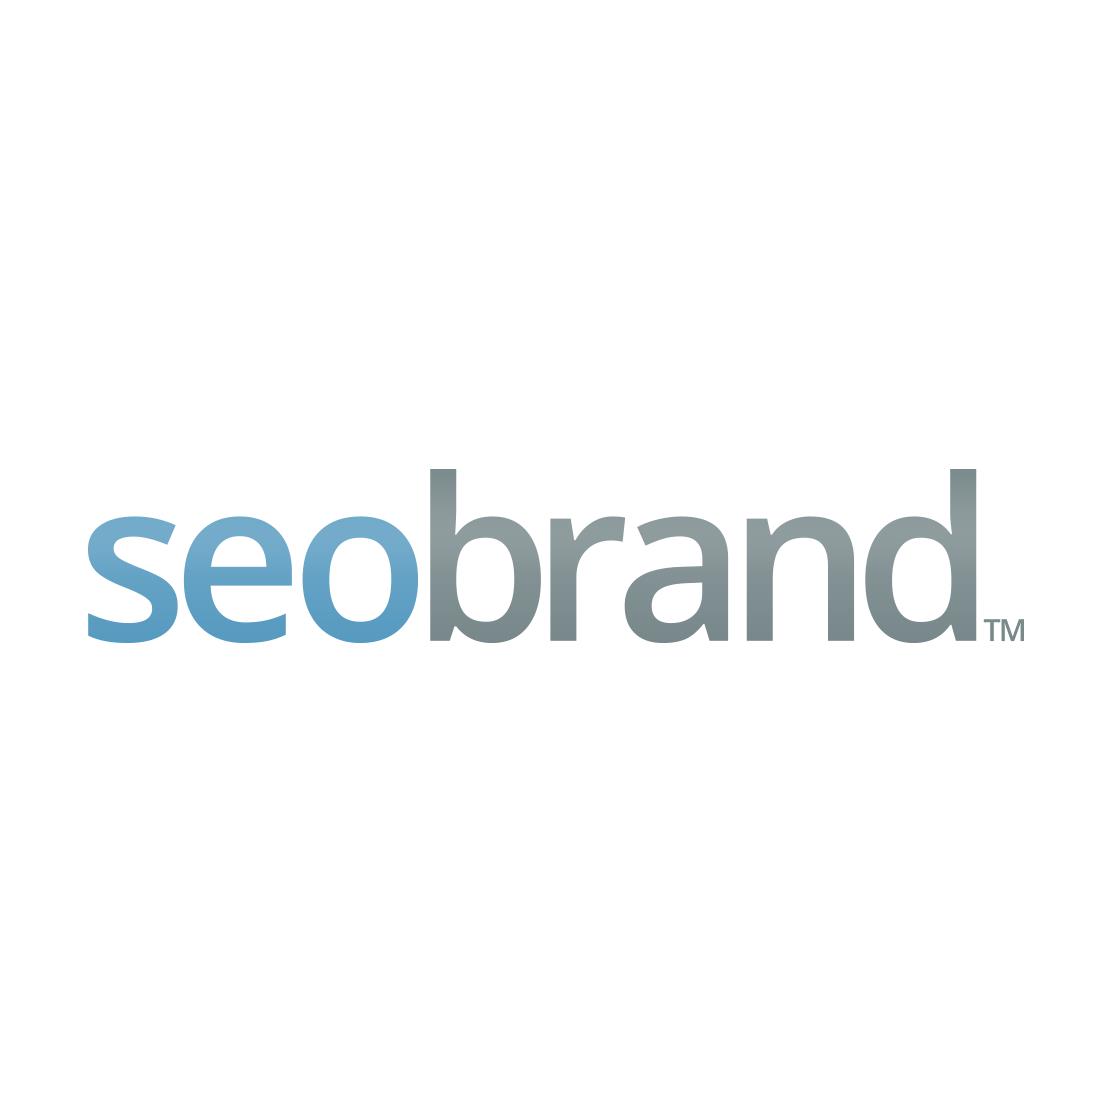 Top SEO Agency Logo: SEO Brand